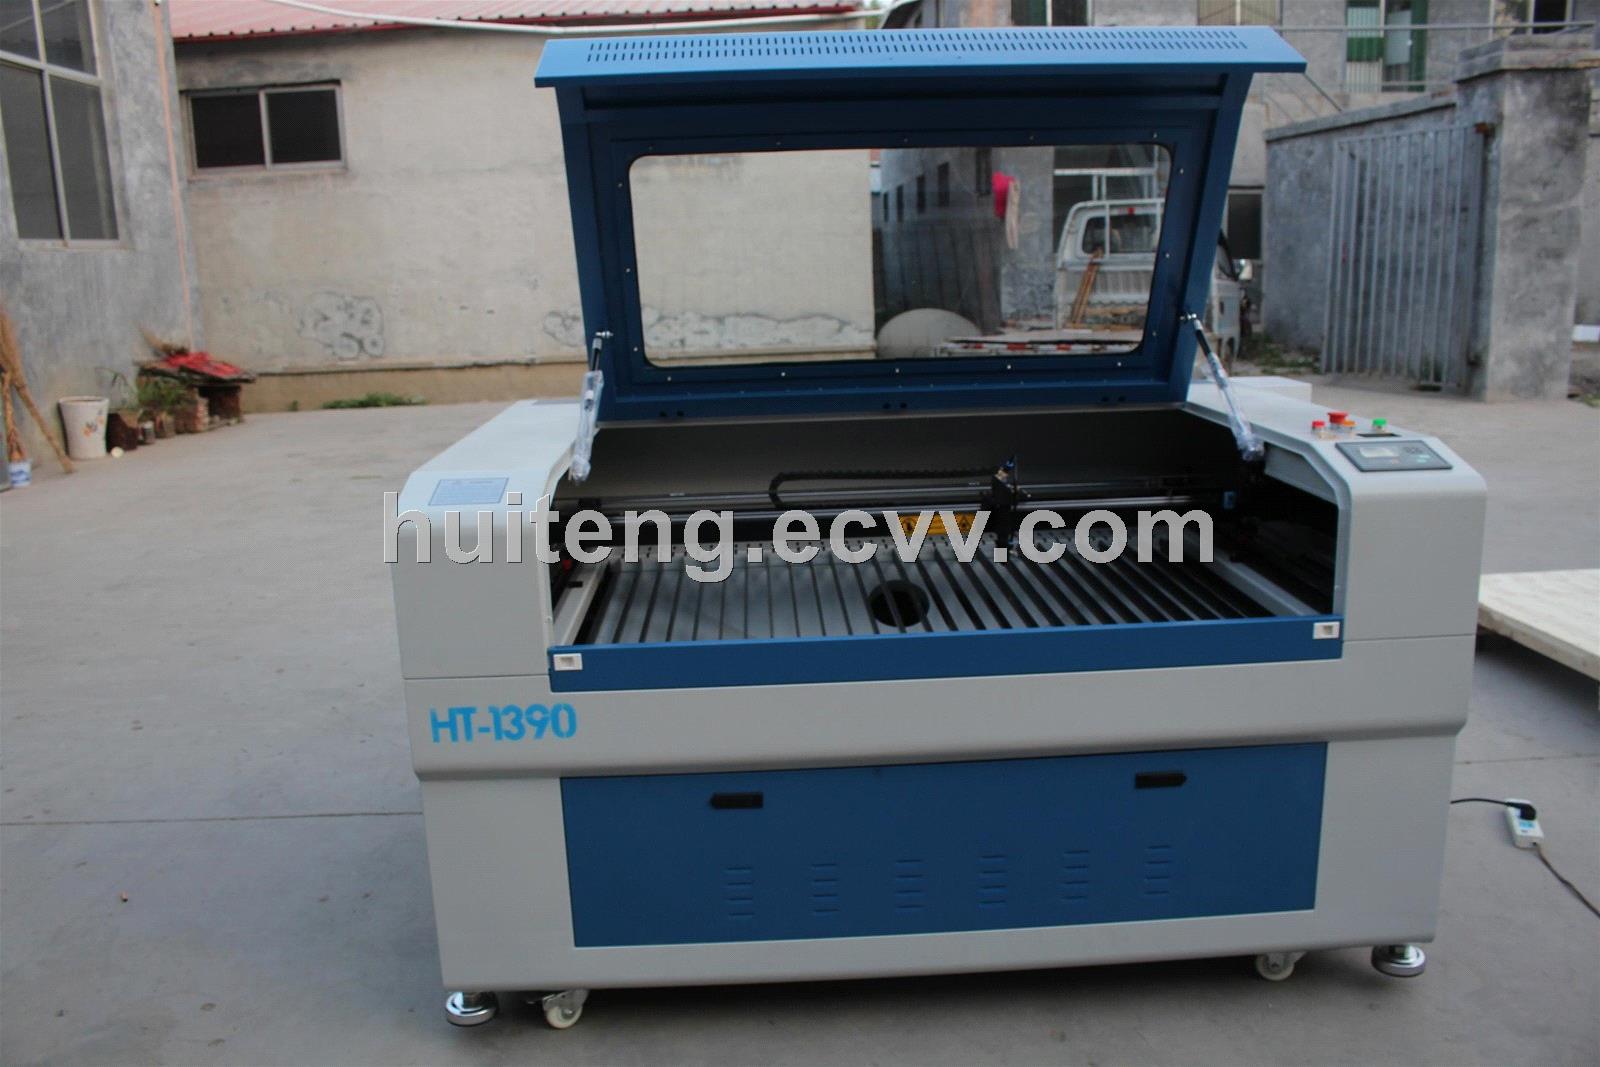 China laser wood cutting machine price With cheap price